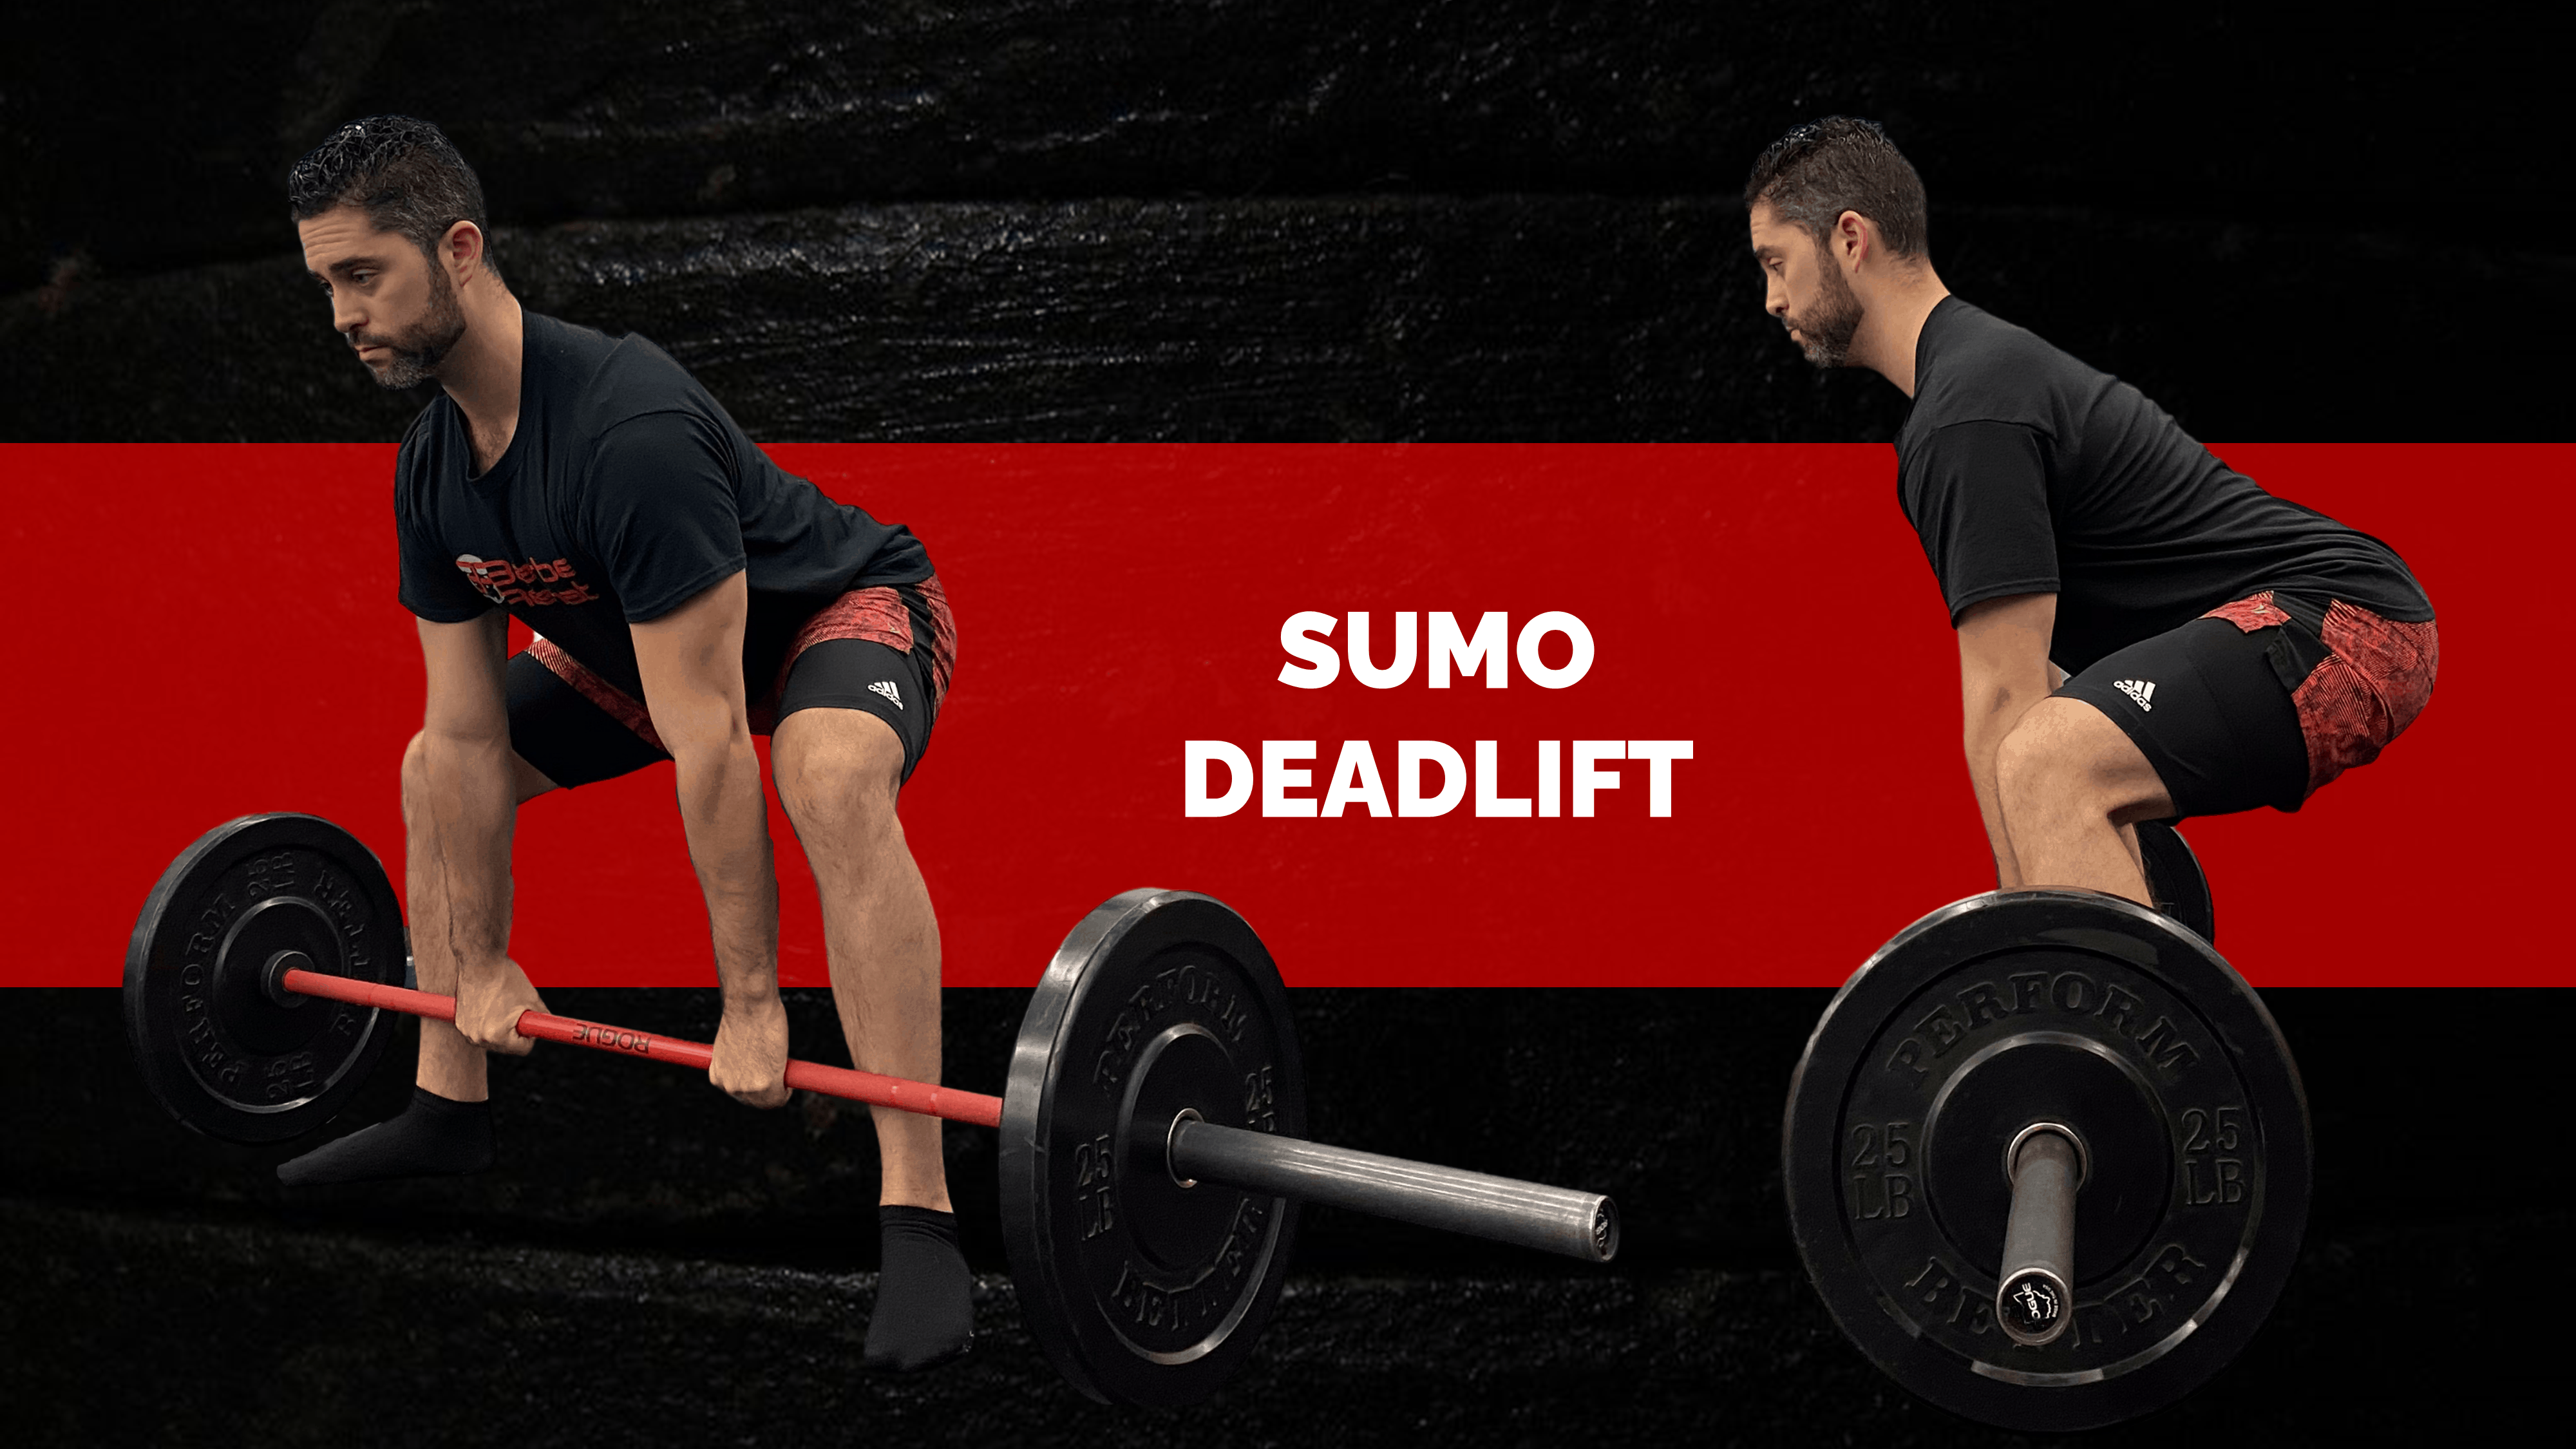 sumo deadlift